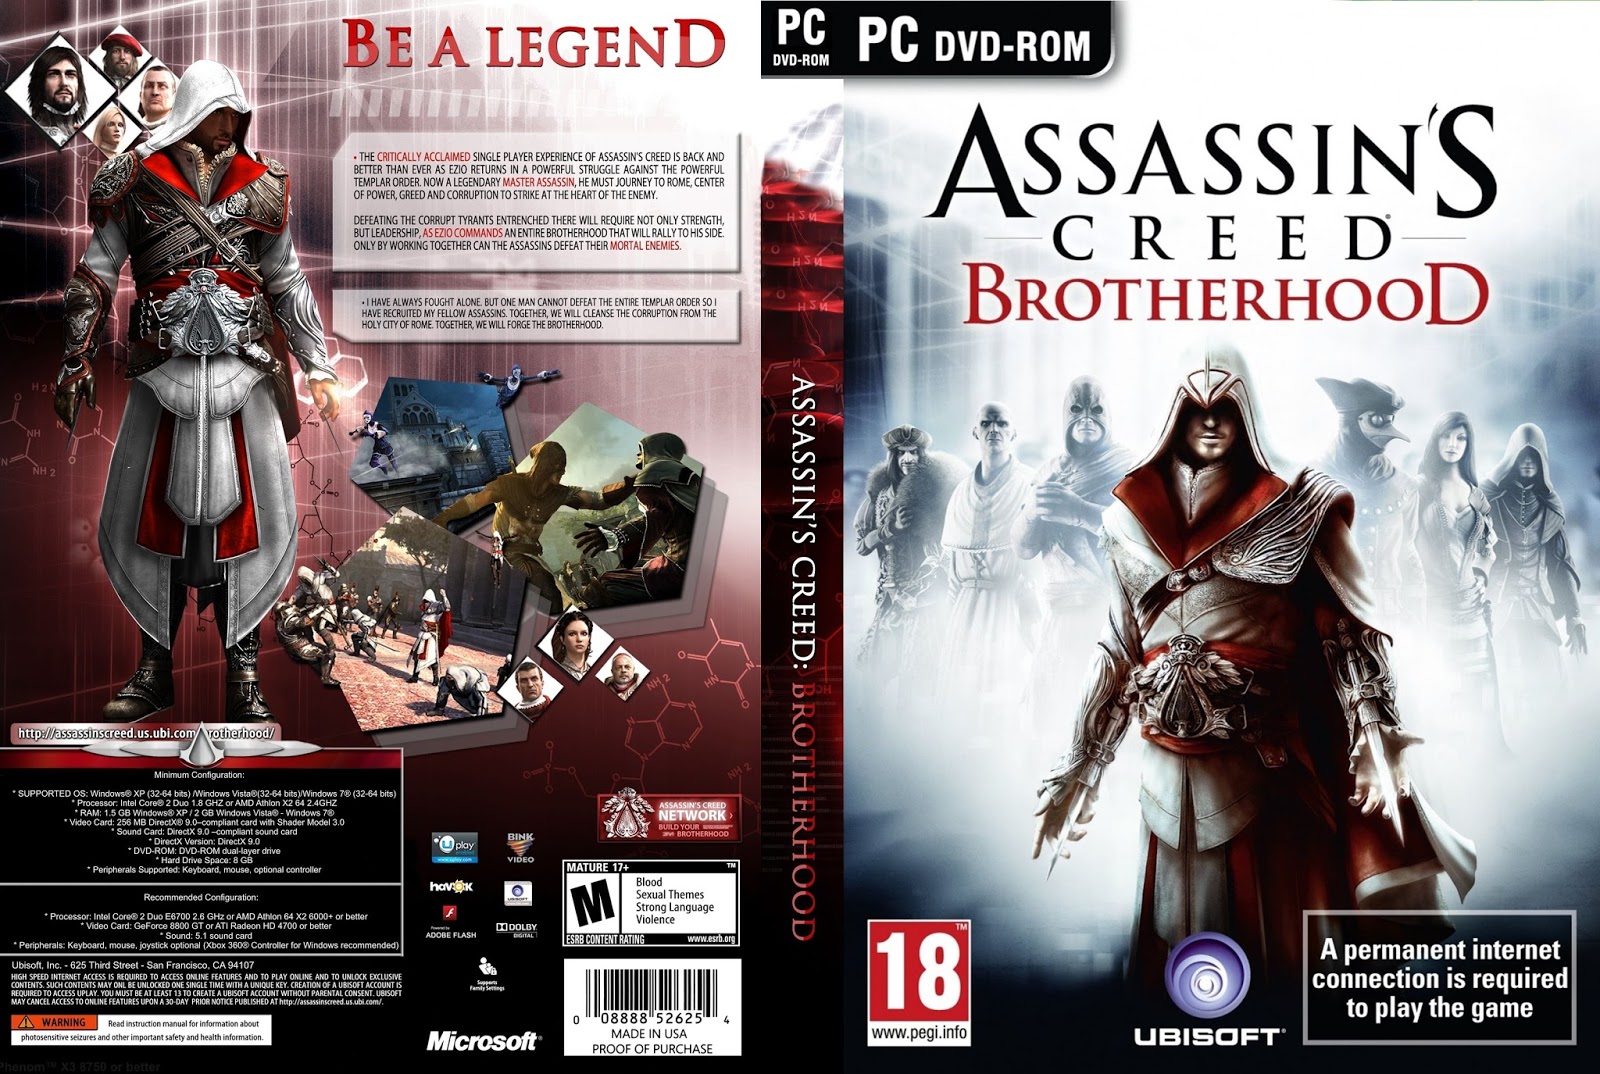 Игра ассасин крид братство. Ассасин Крид братство крови обложка. Обложка ассасин бразерхуд. Диск с игрой ассасин Крид для ПК. Assassins Creed Brotherhood Xbox 360 обложка.